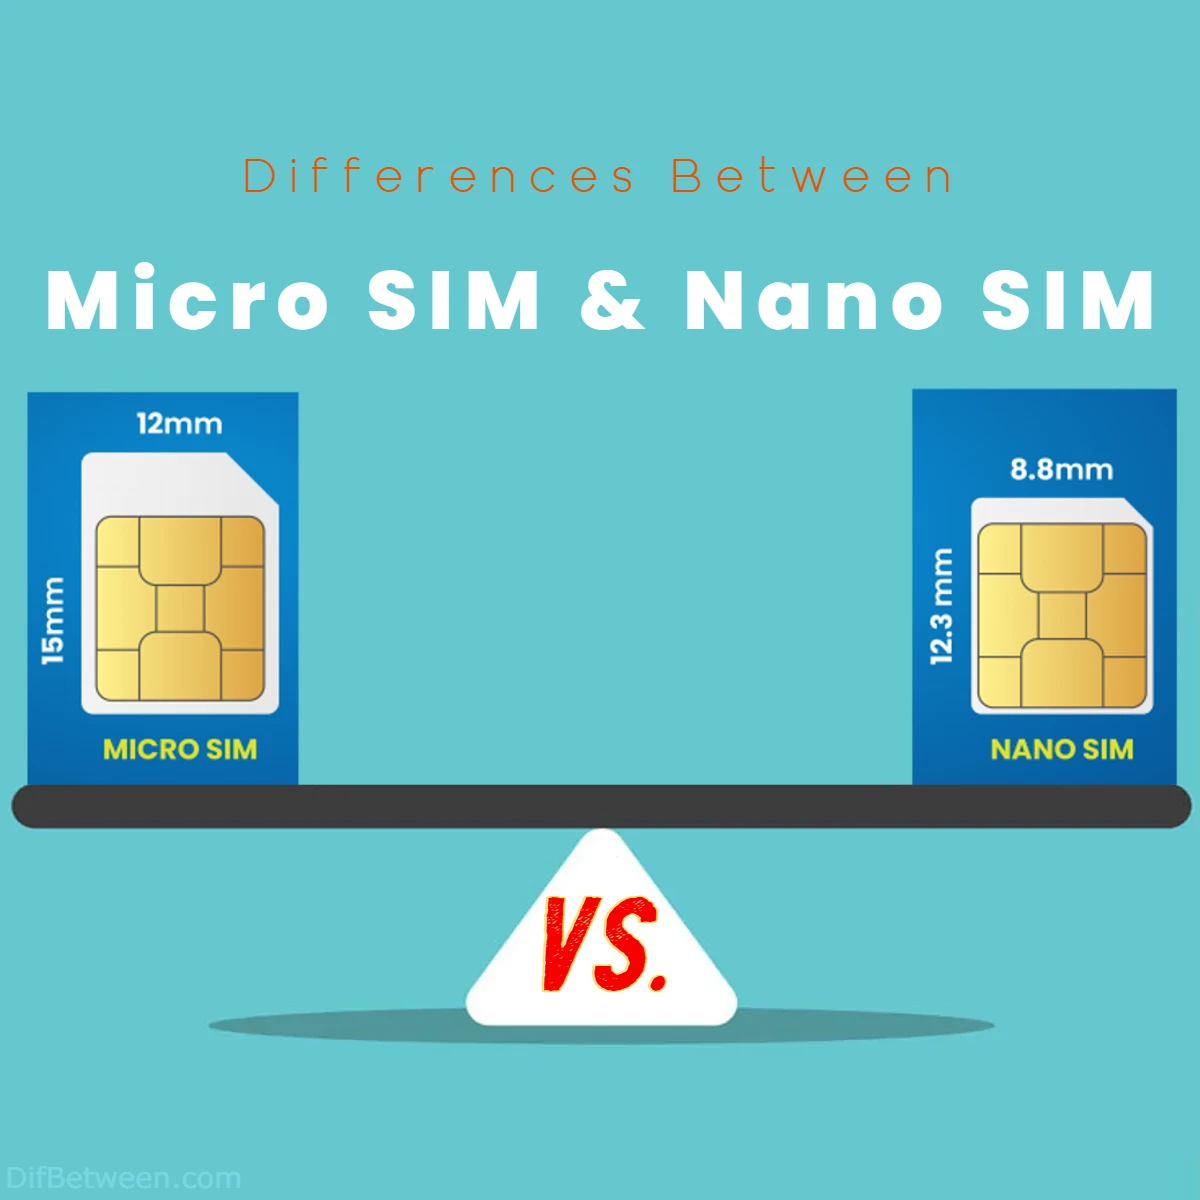 Difference Between Micro SIM and Nano SIM